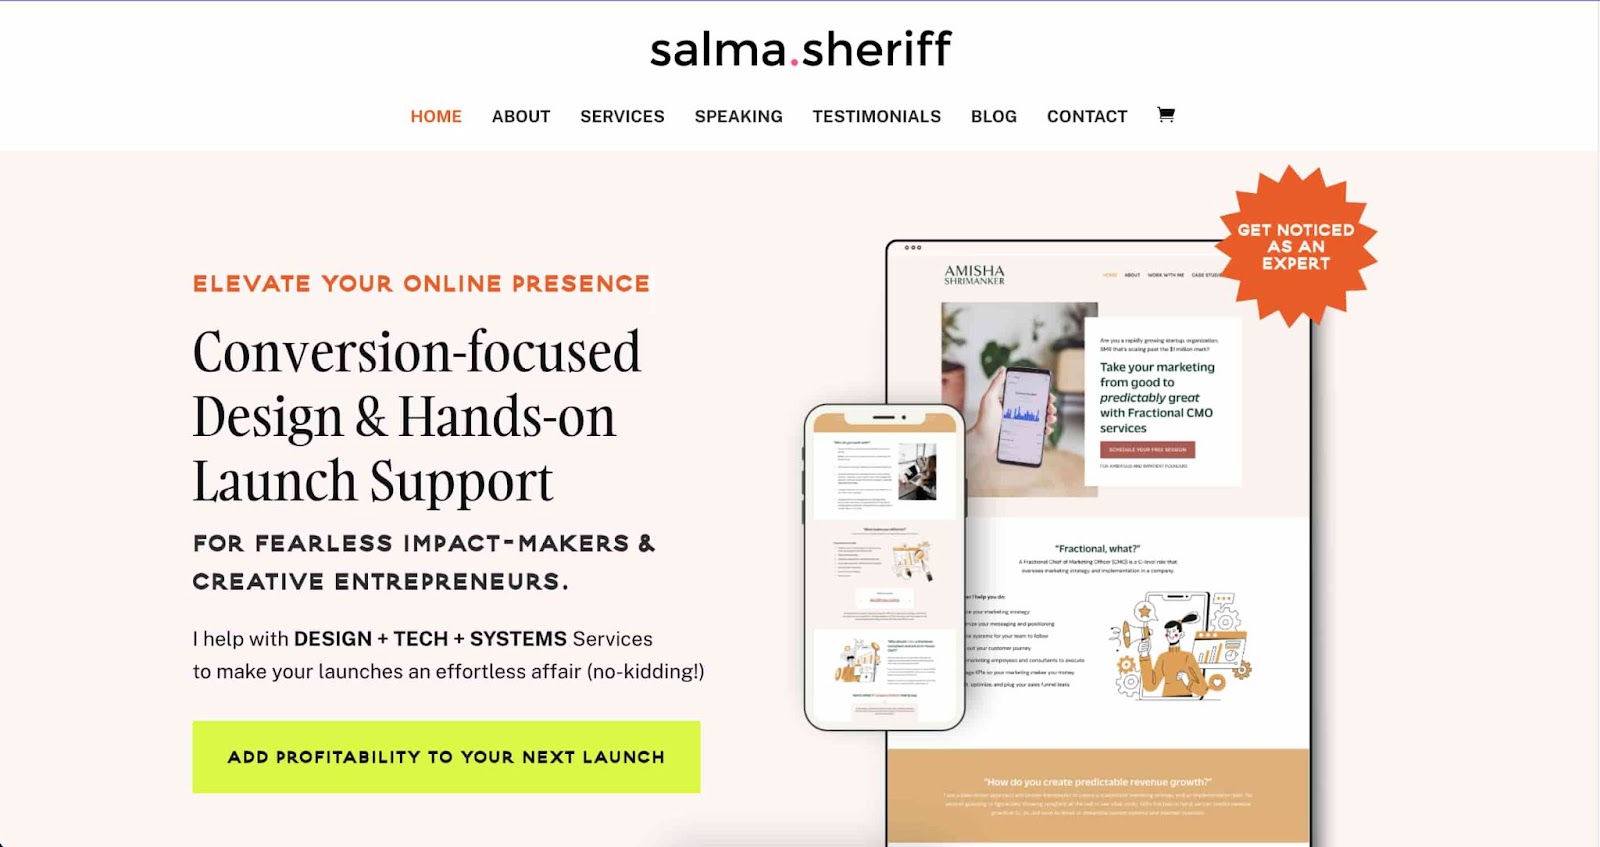 salma sheriff virtual assistant website example